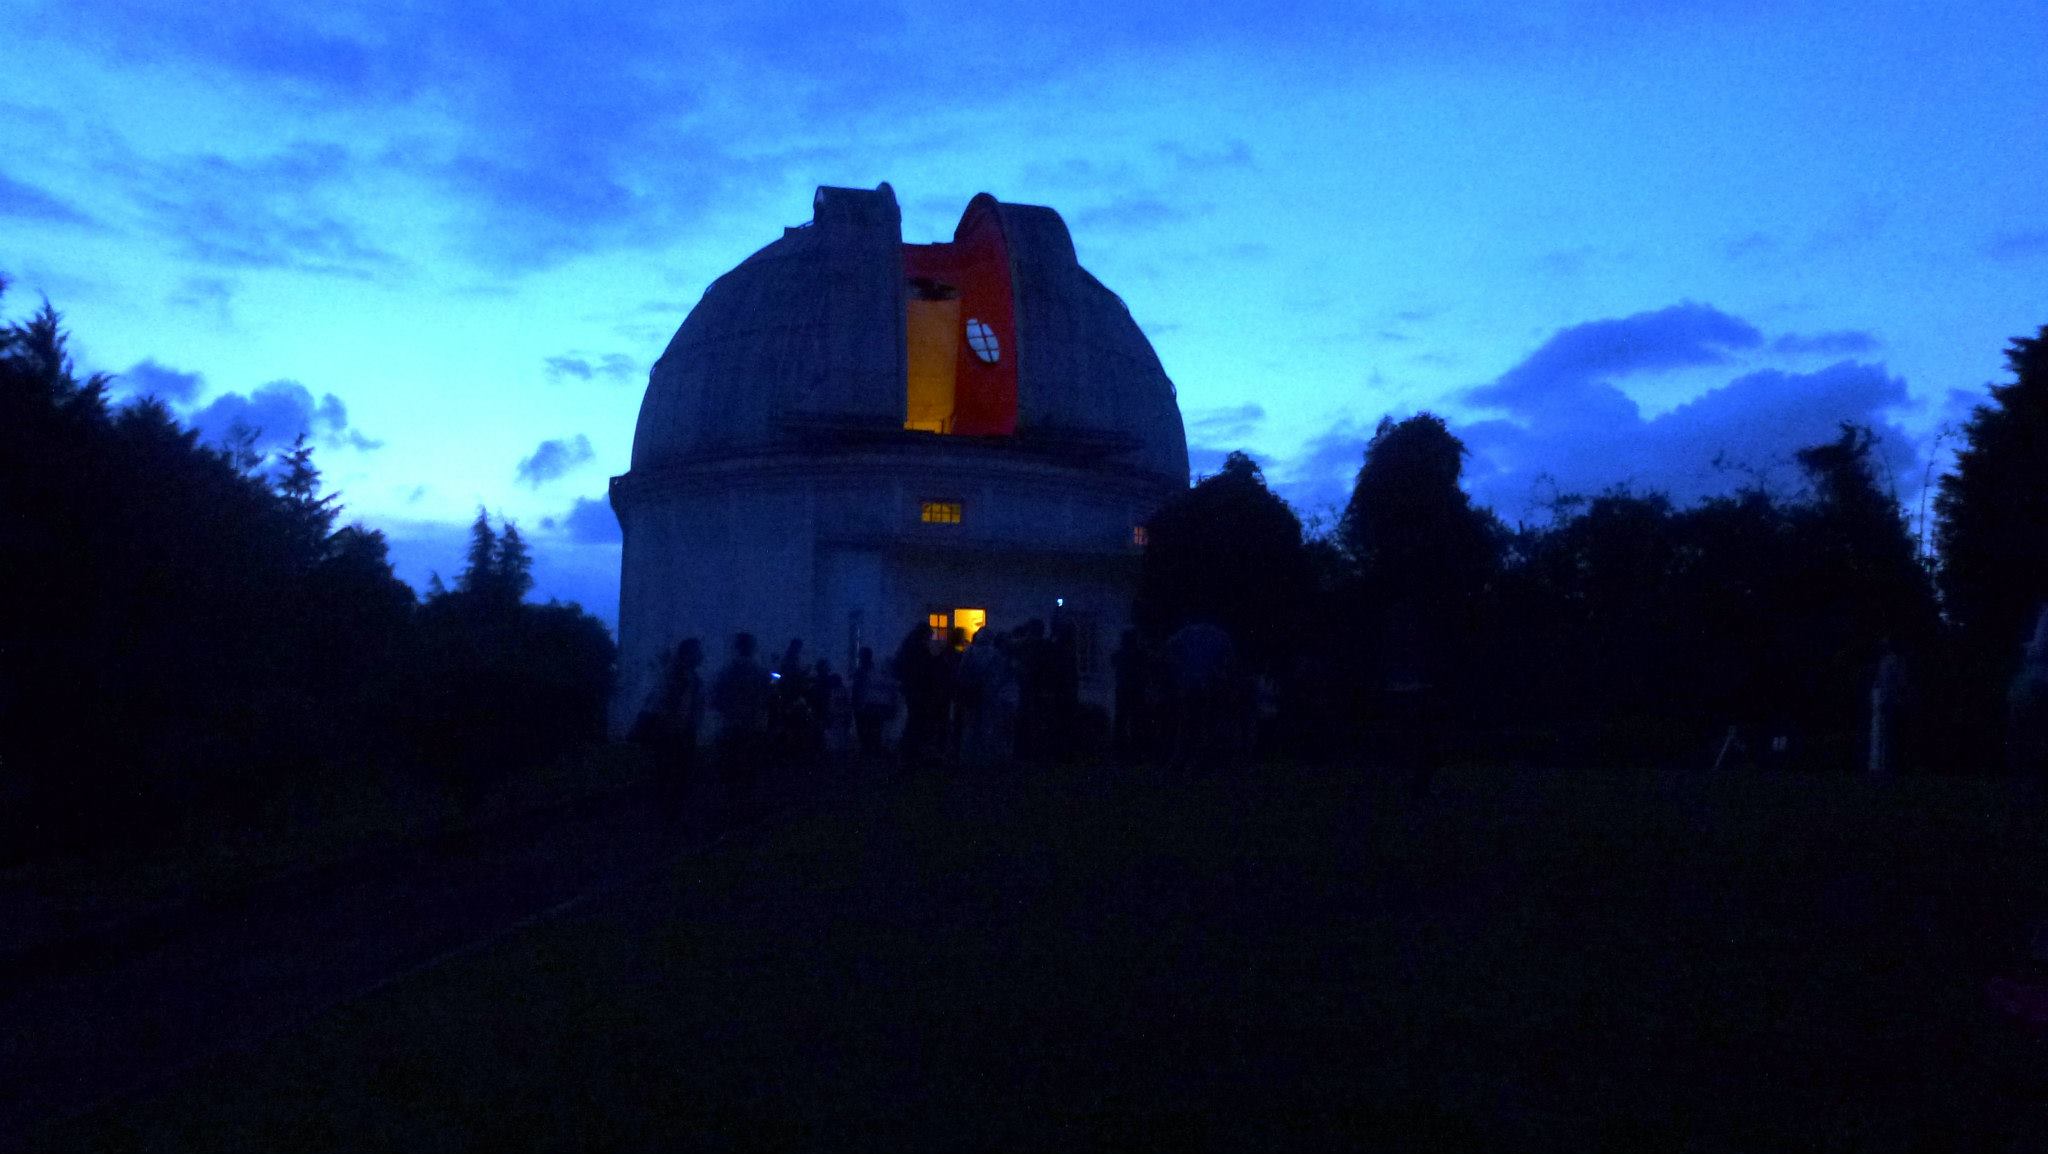 Download this Observatorium Bosscha picture